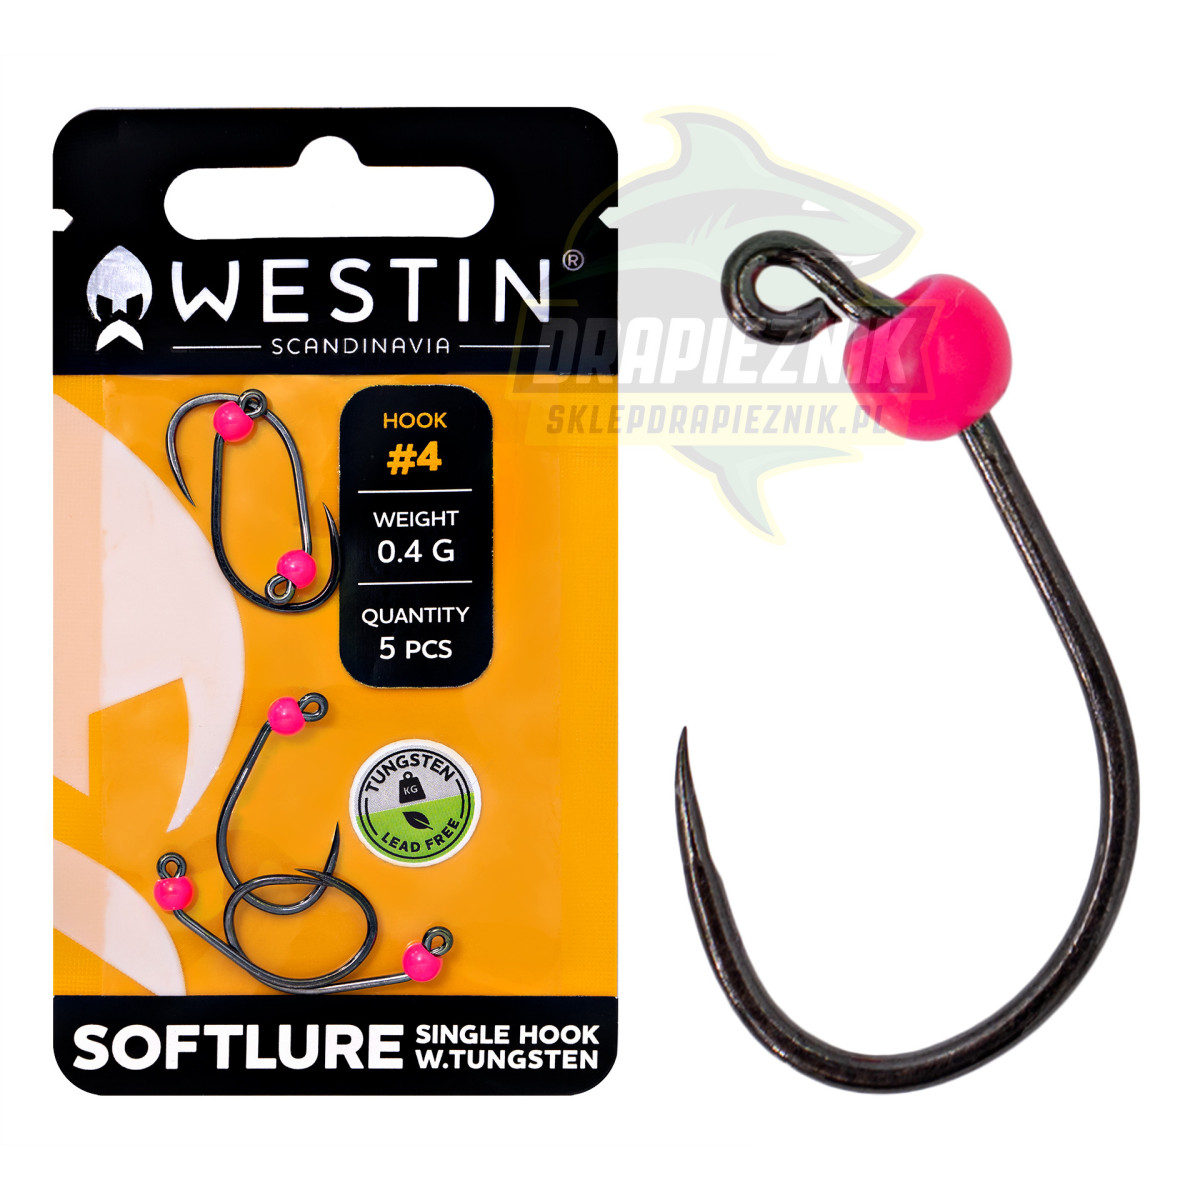 Główki Westin Softlure Single Hook Tungsten - PINK / hak 4 / 0.4g